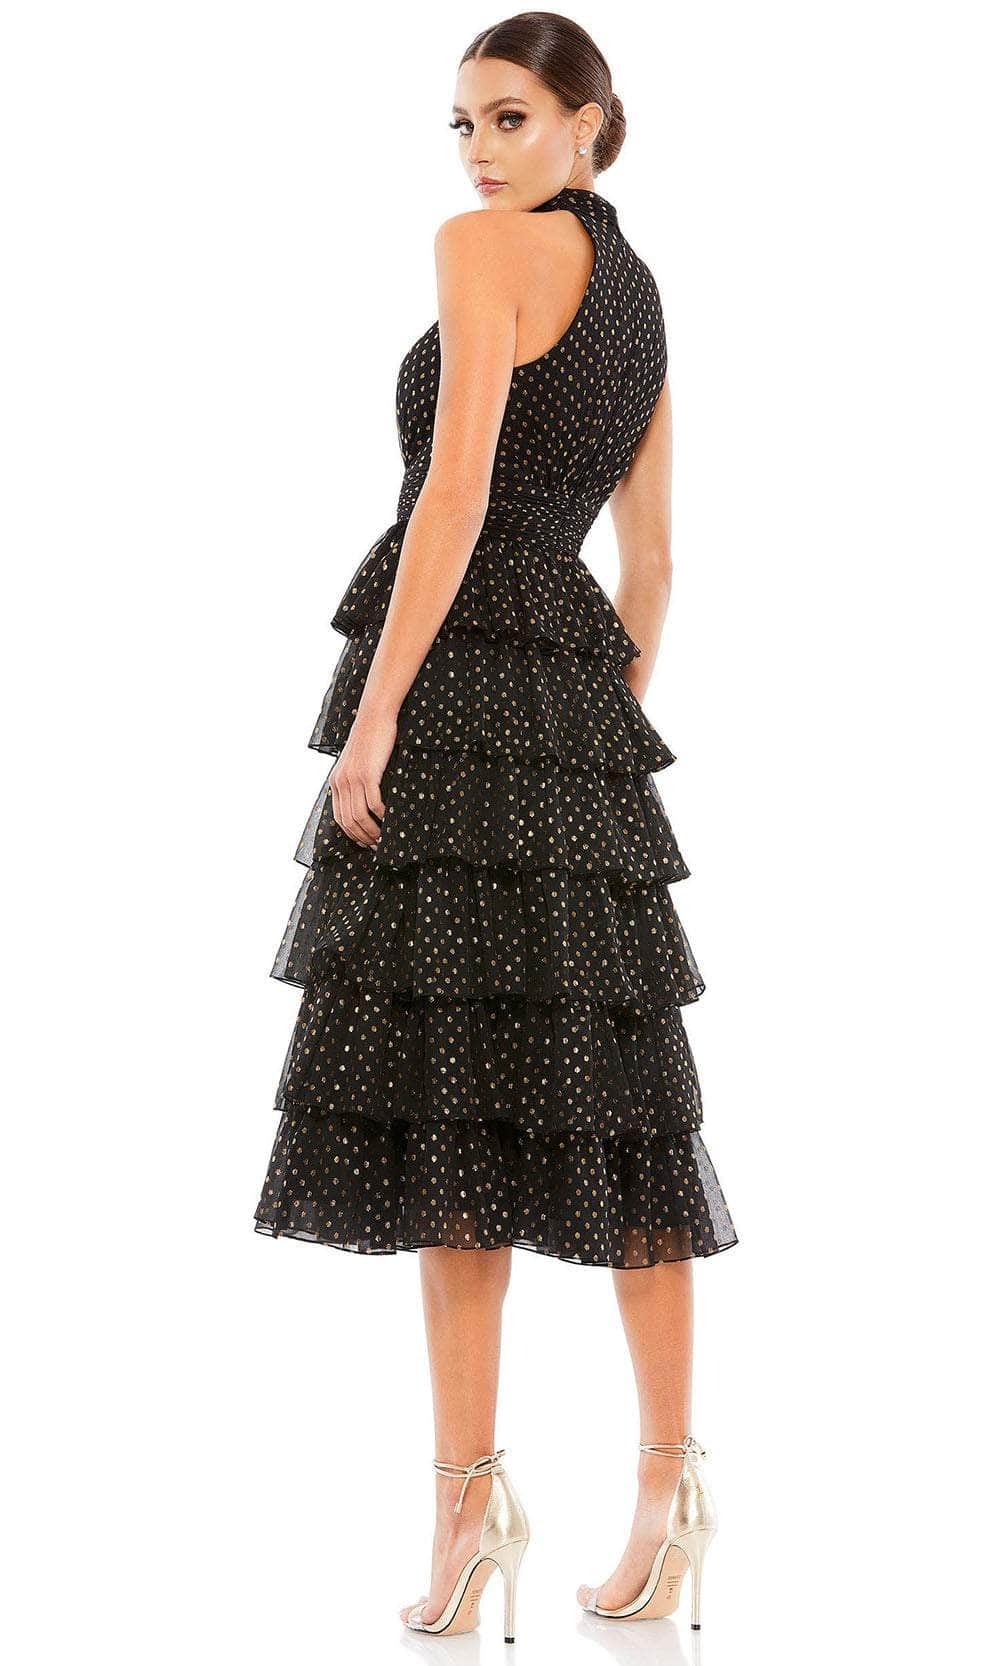 Mac Duggal 49510 - Halter Polka Dot Cocktail Dress Special Occasion Dress